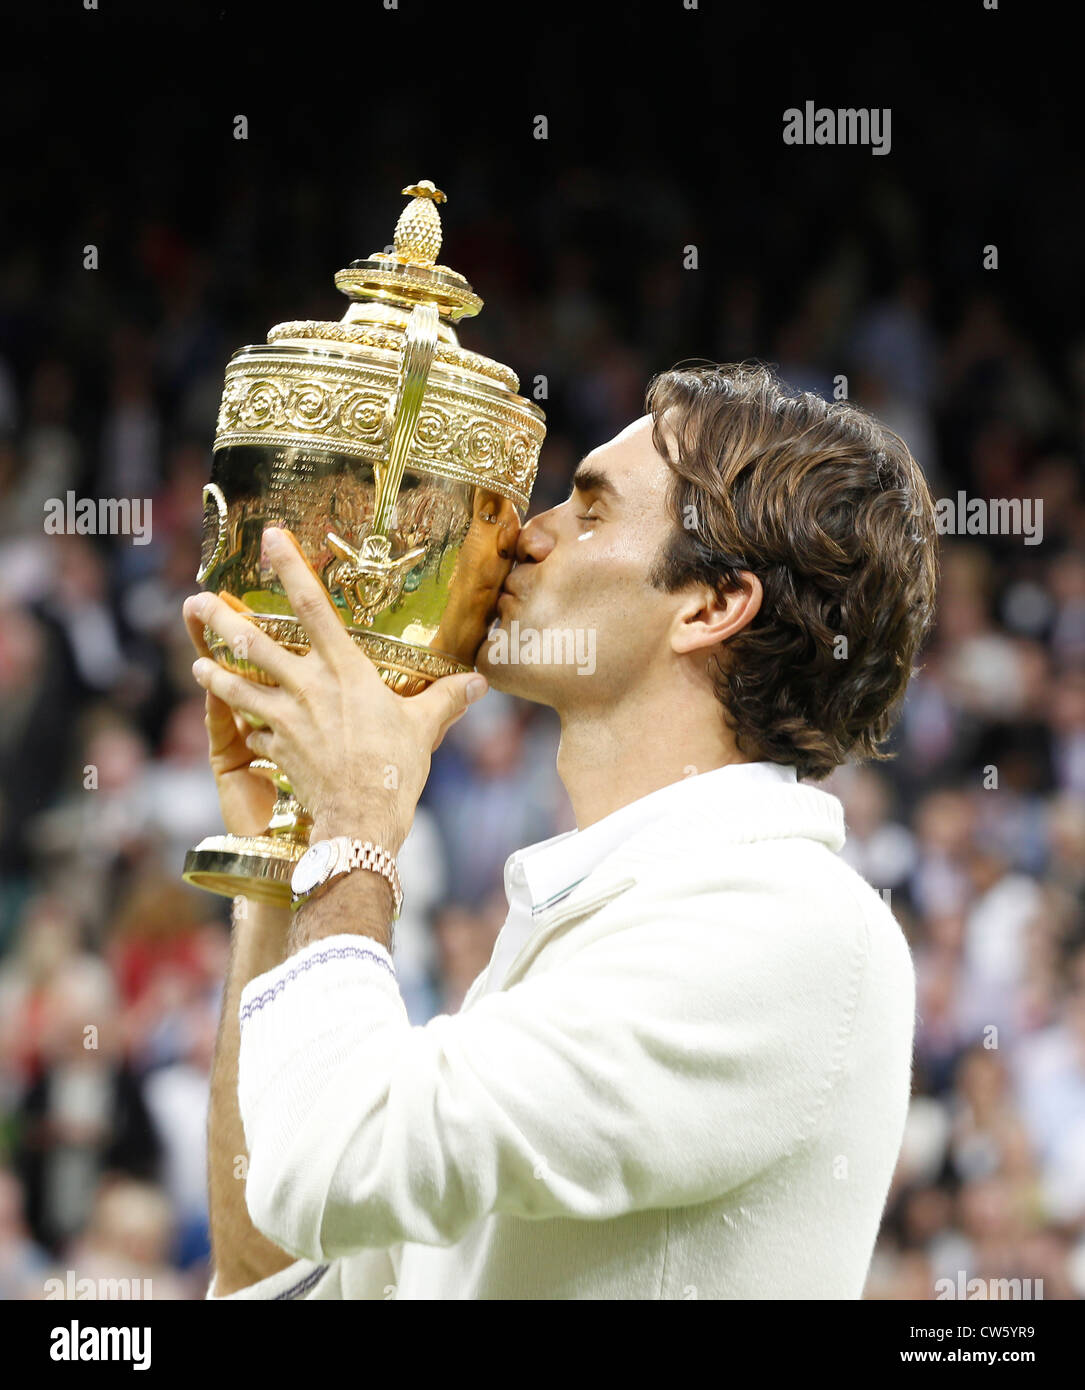 Wimbledon 2012 Herren Einzel Finale, Siegerehrung, Gewinner Roger Federer (SUI) küssen Trophy. Stockfoto